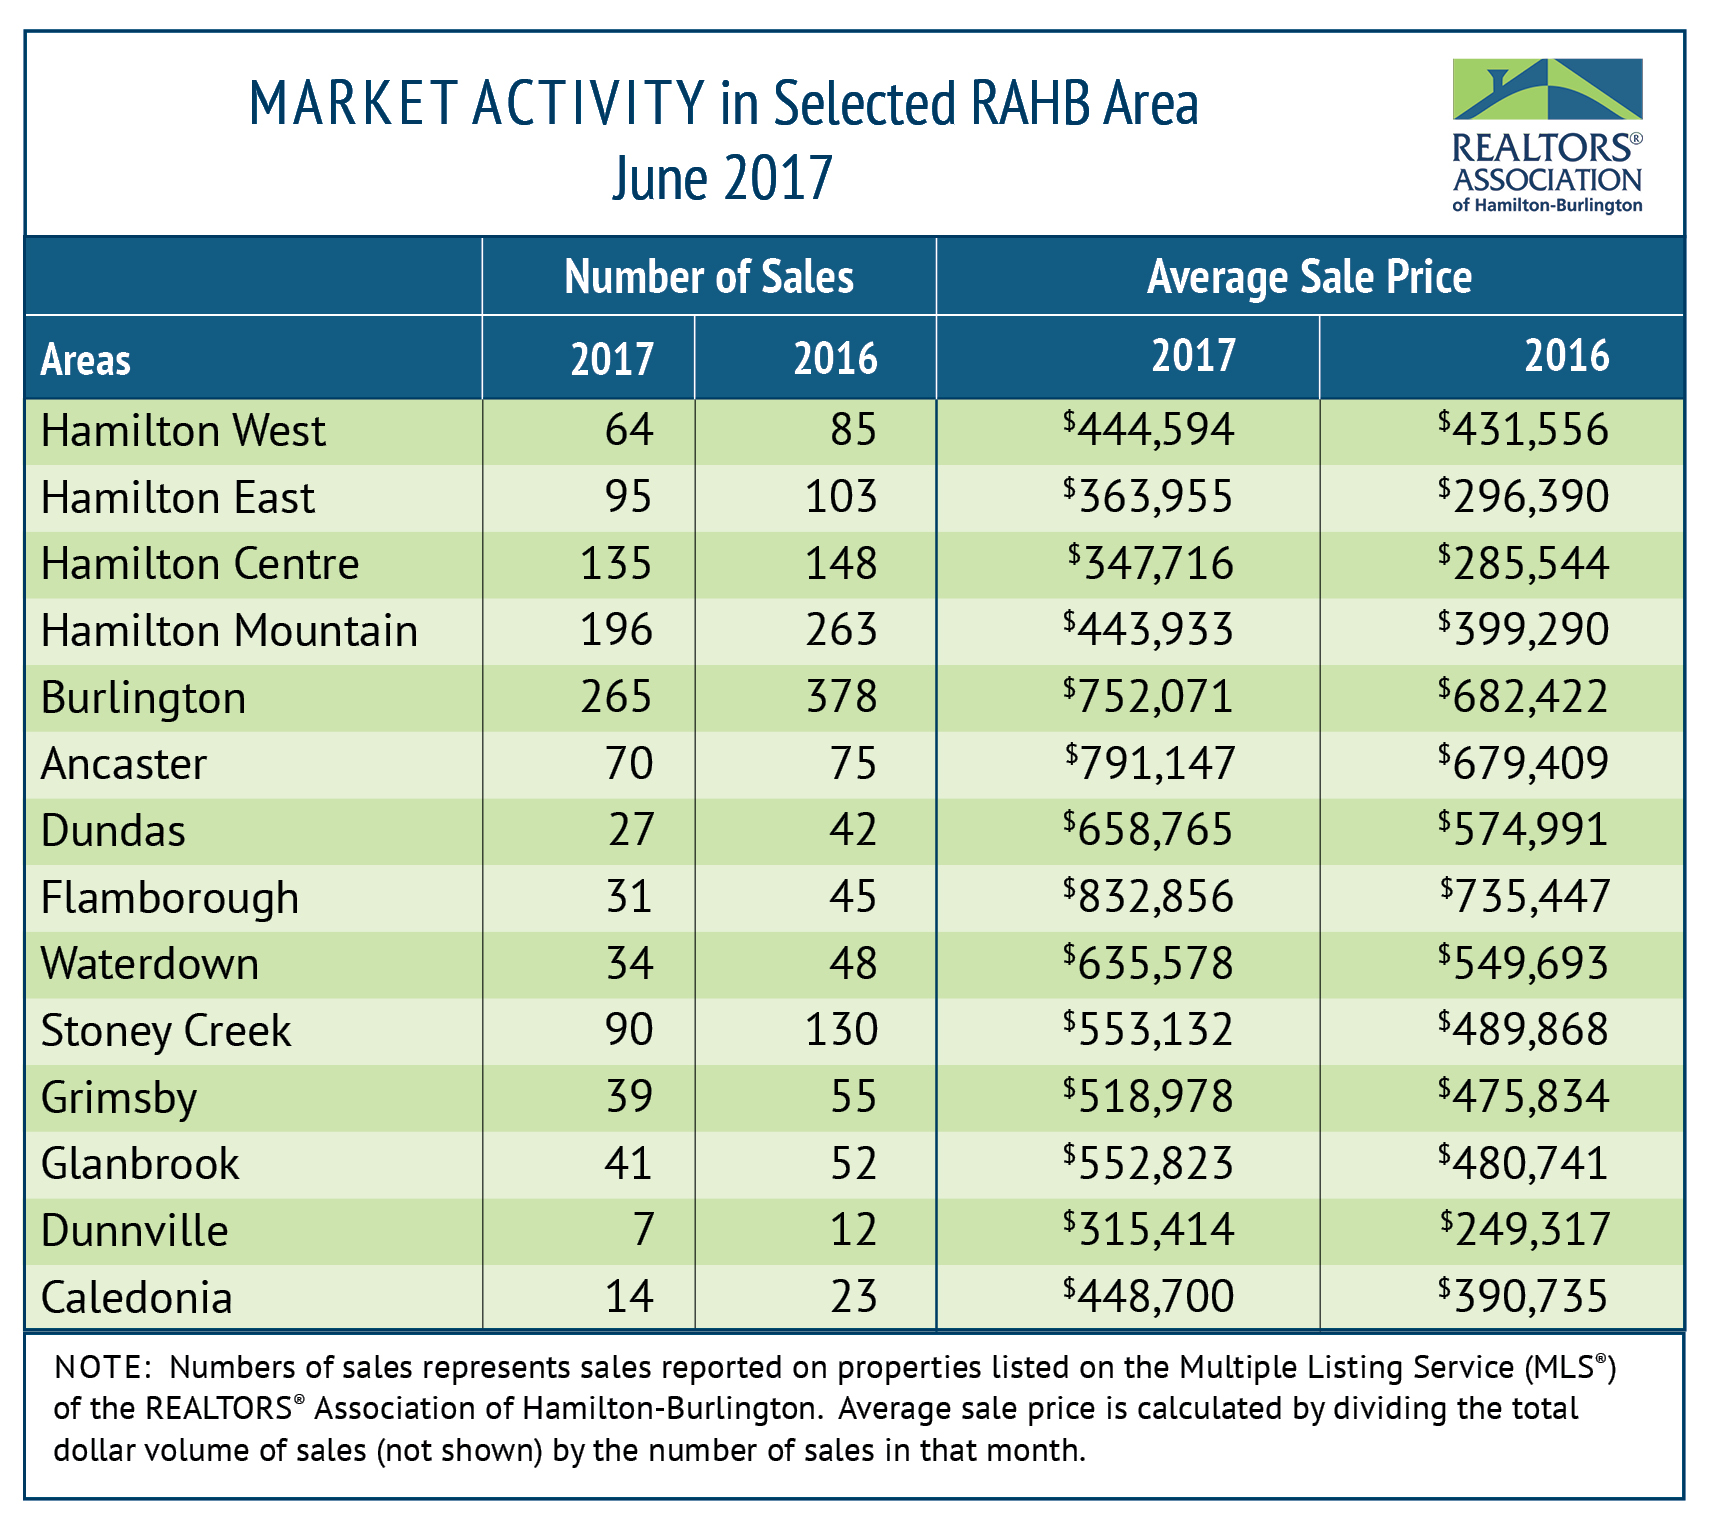 RAHB Market Activity for June 2017